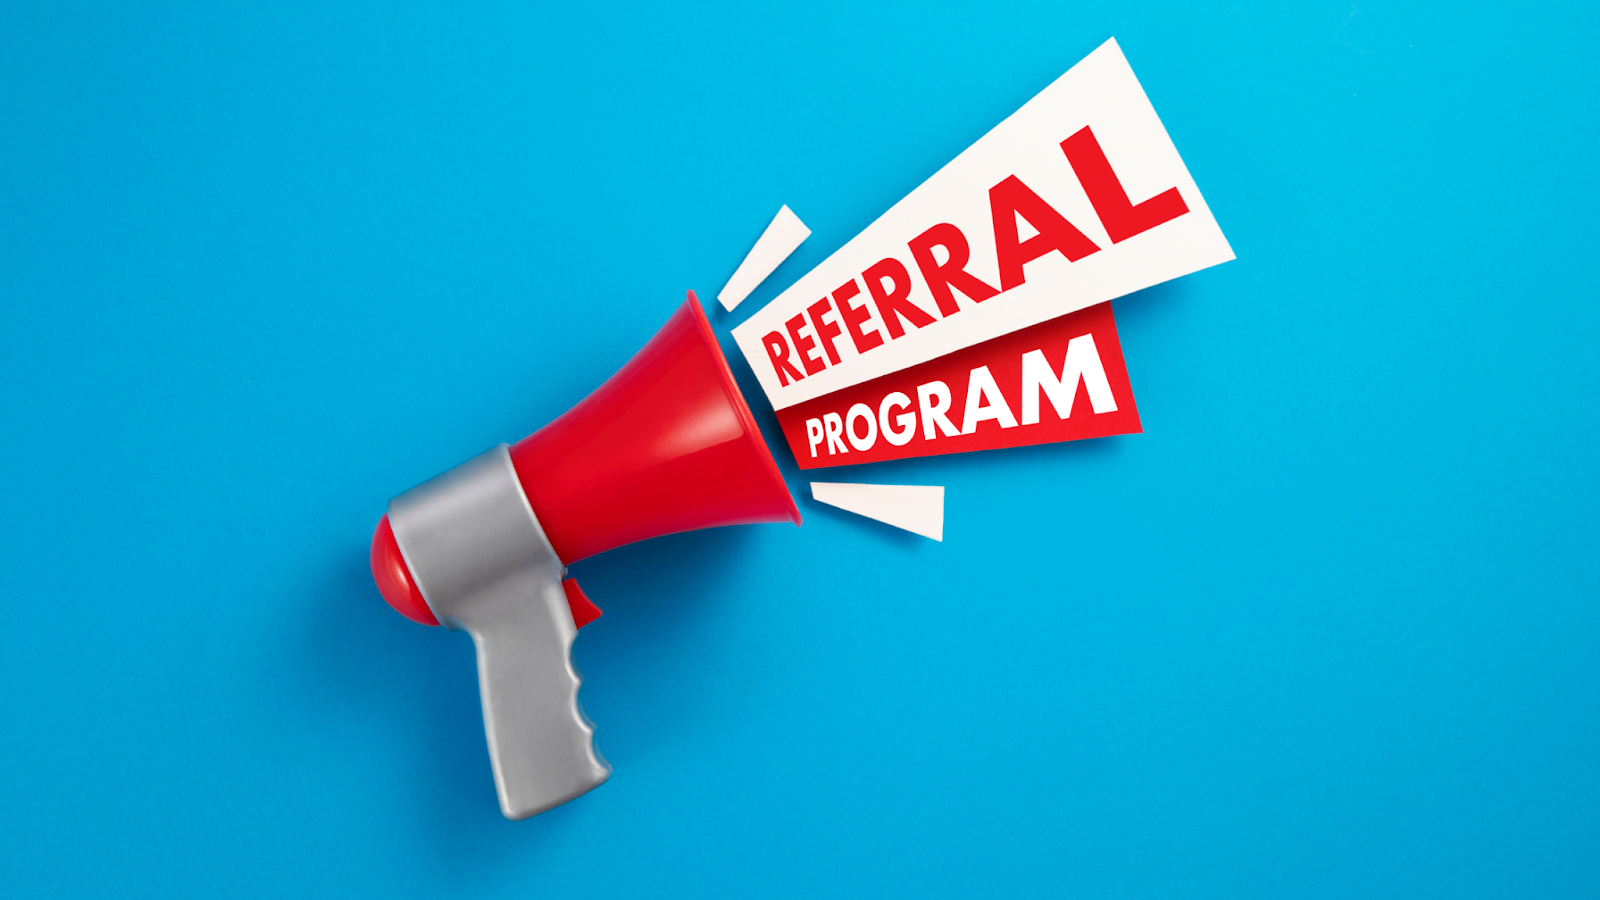 Build a Referral Program